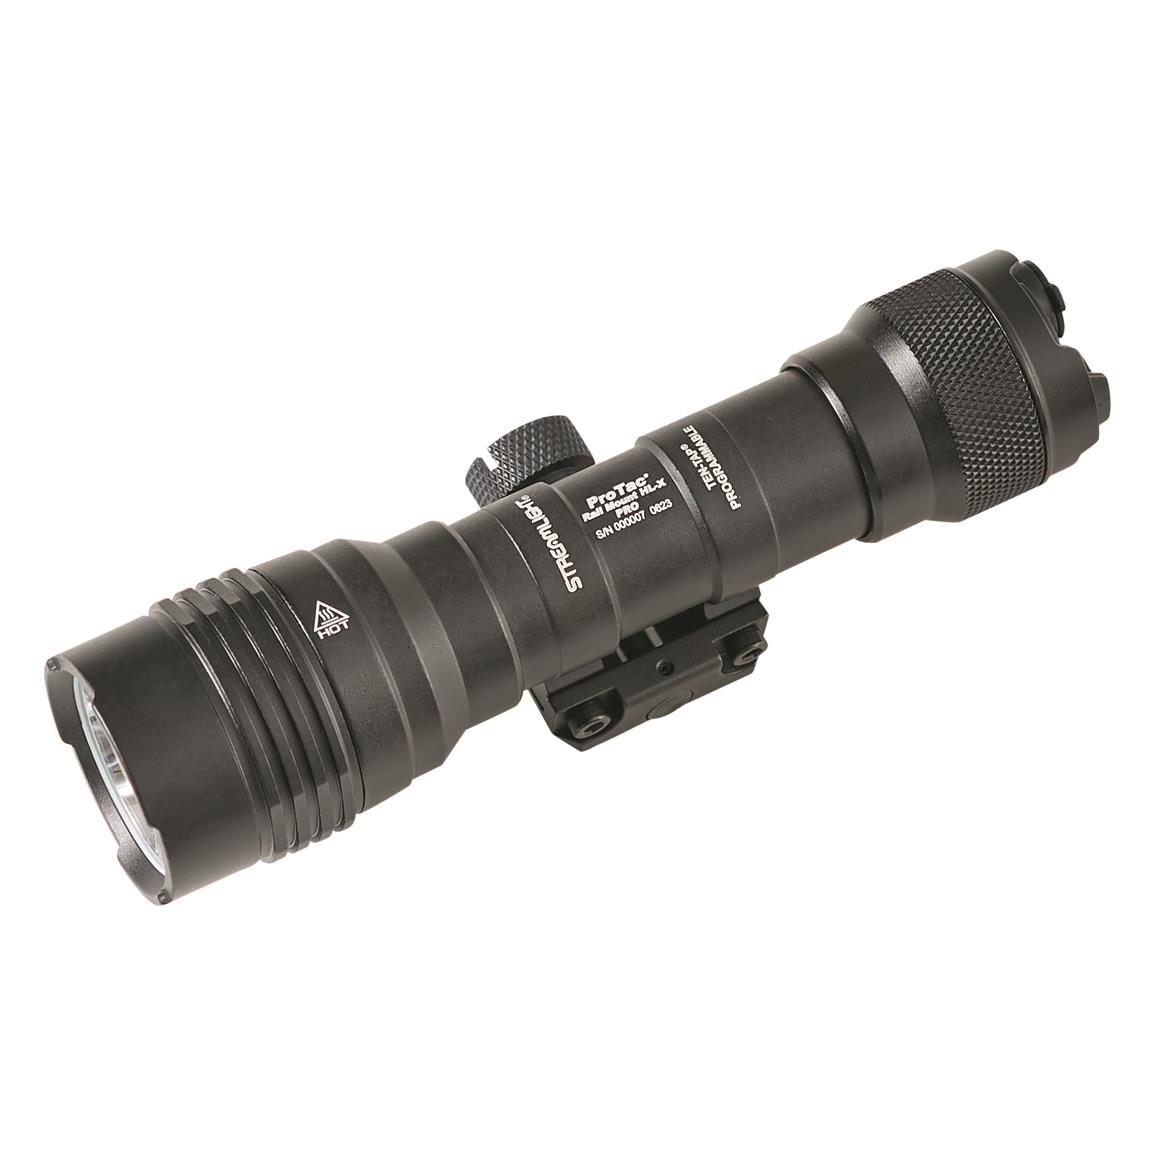 Streamlight ProTac HL-X Pro USB 1,000-lumen Weapon Light Only